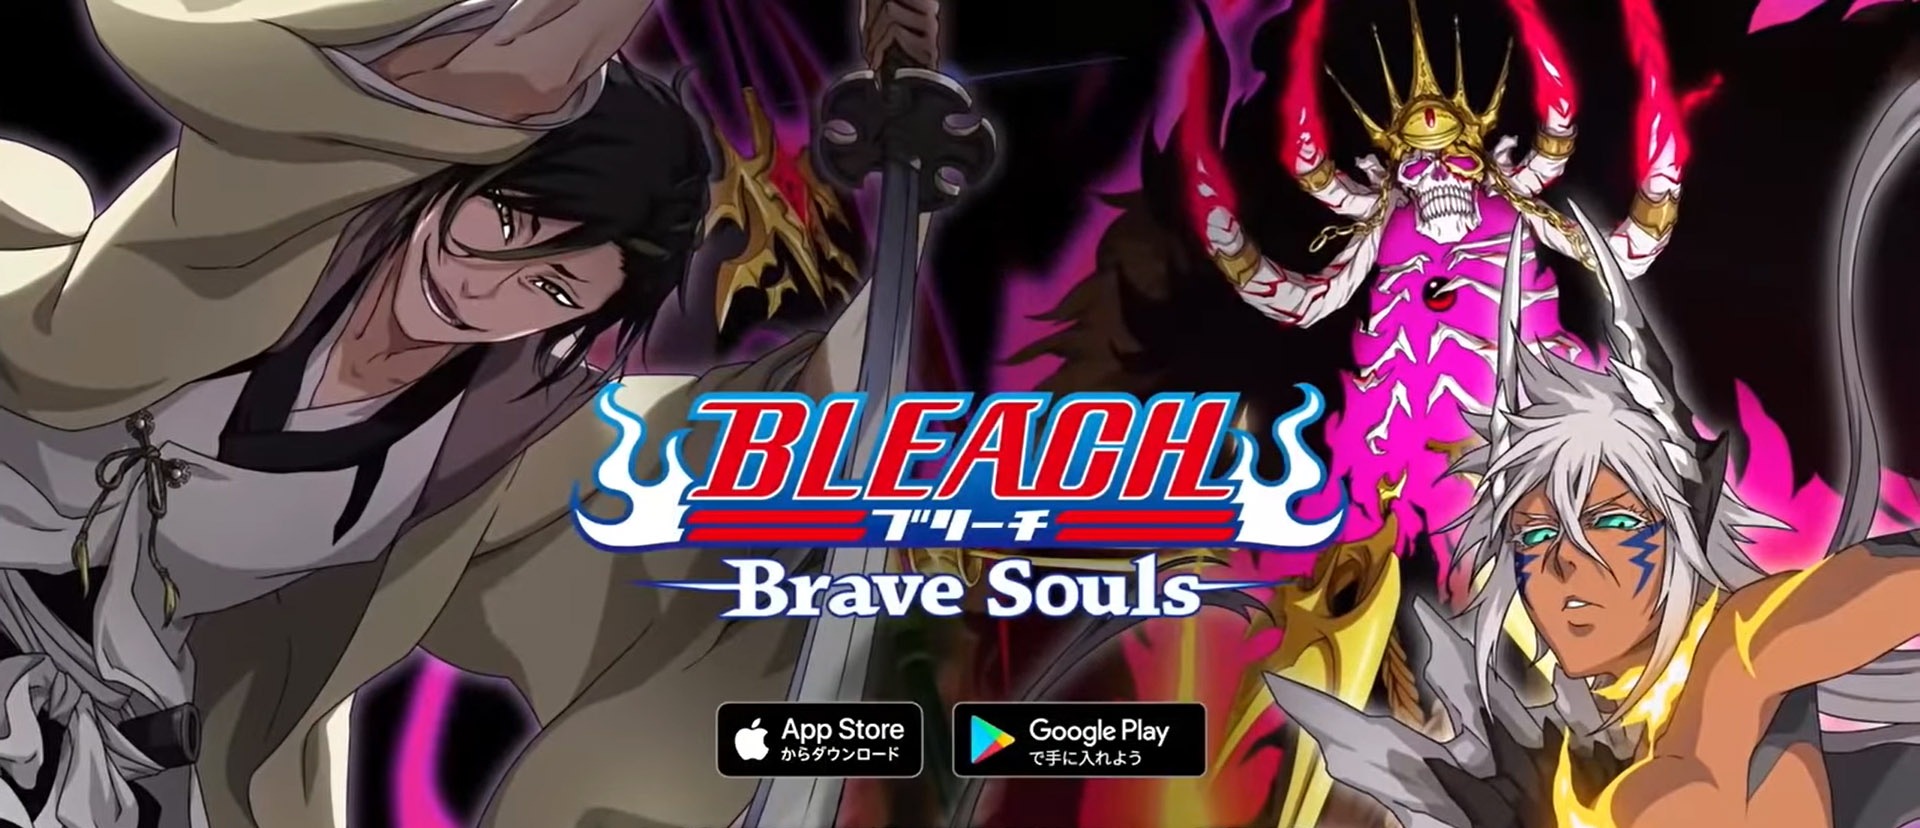 Bleach Brave Souls Loterie De Fin Novembre Avec Tokinada Baraggan Et Halibel Version Cfyow